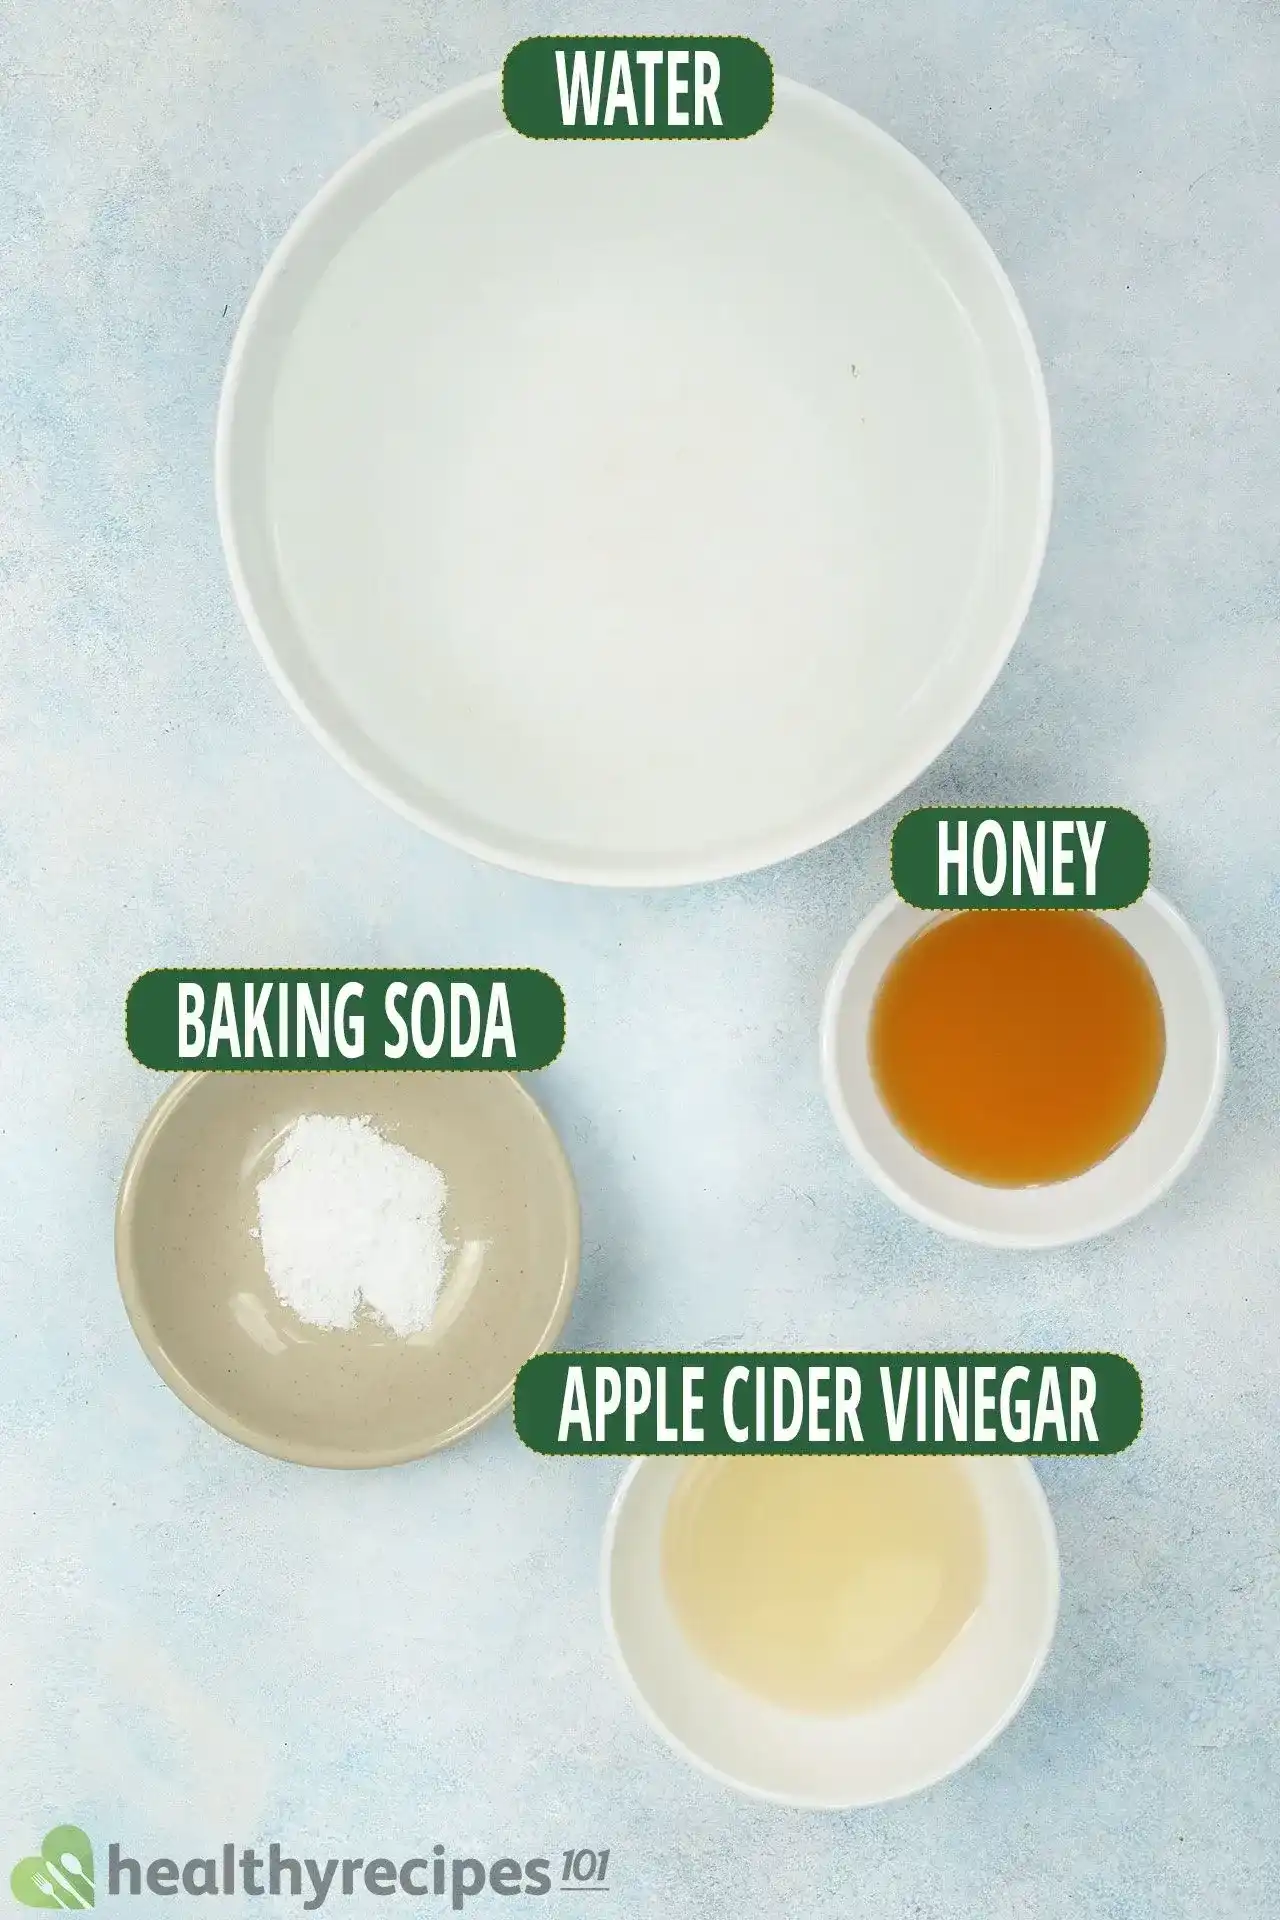 Baking Soda and Apple Cider Vinegar Recipe for Health Benefits